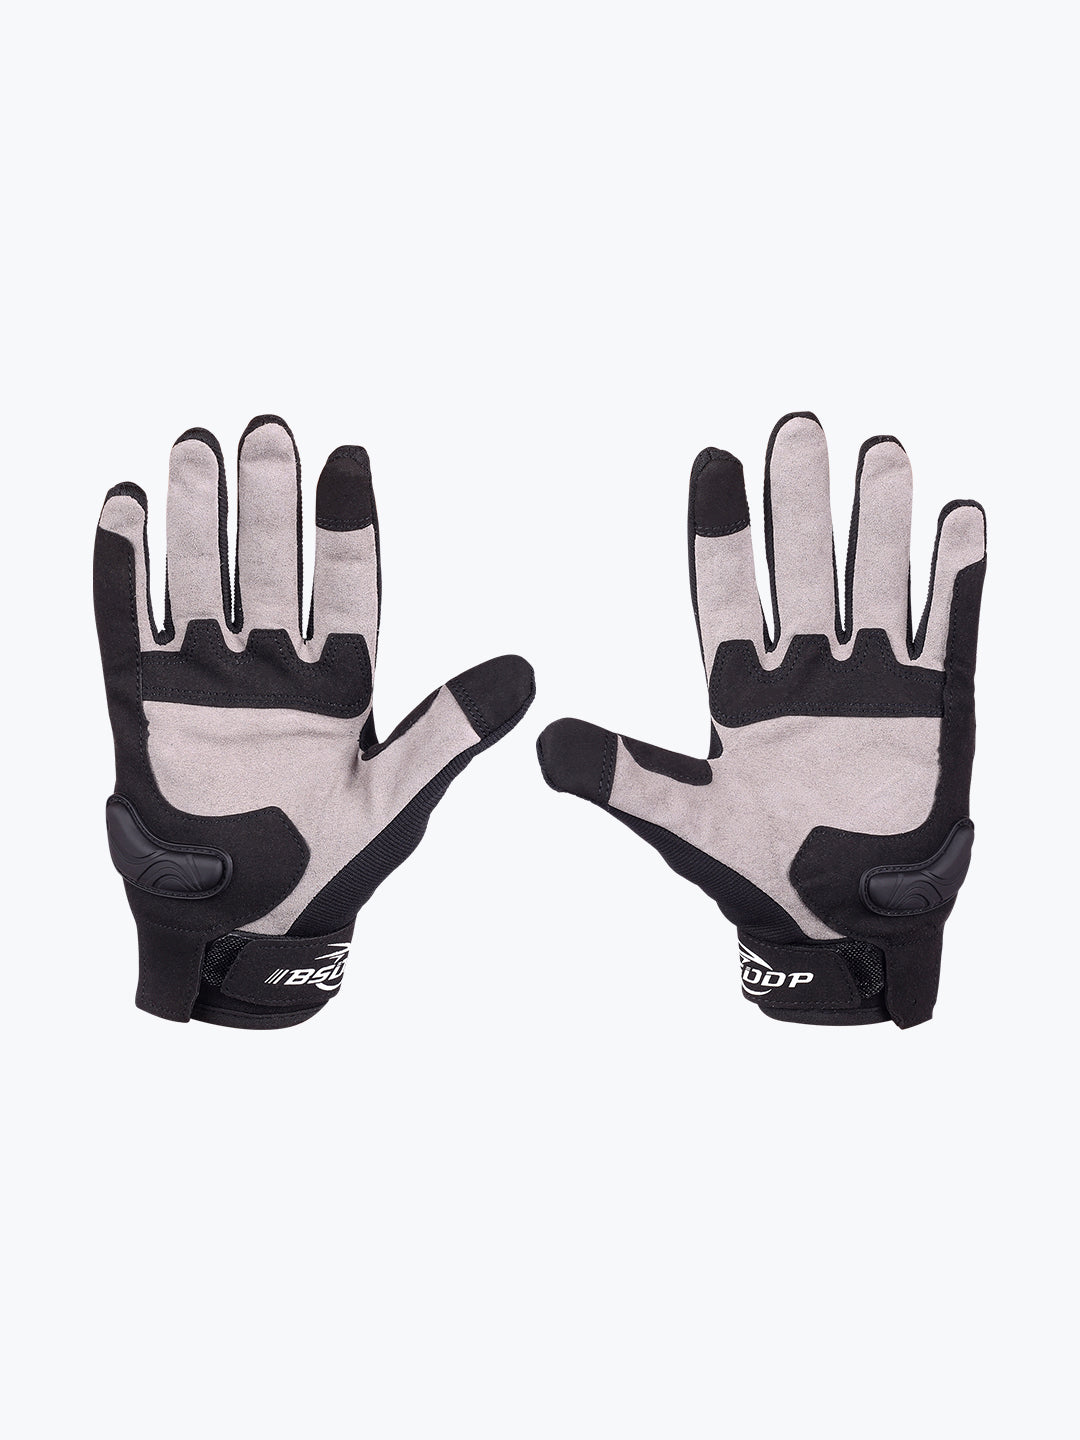 BSDDP Gloves A0143 Black